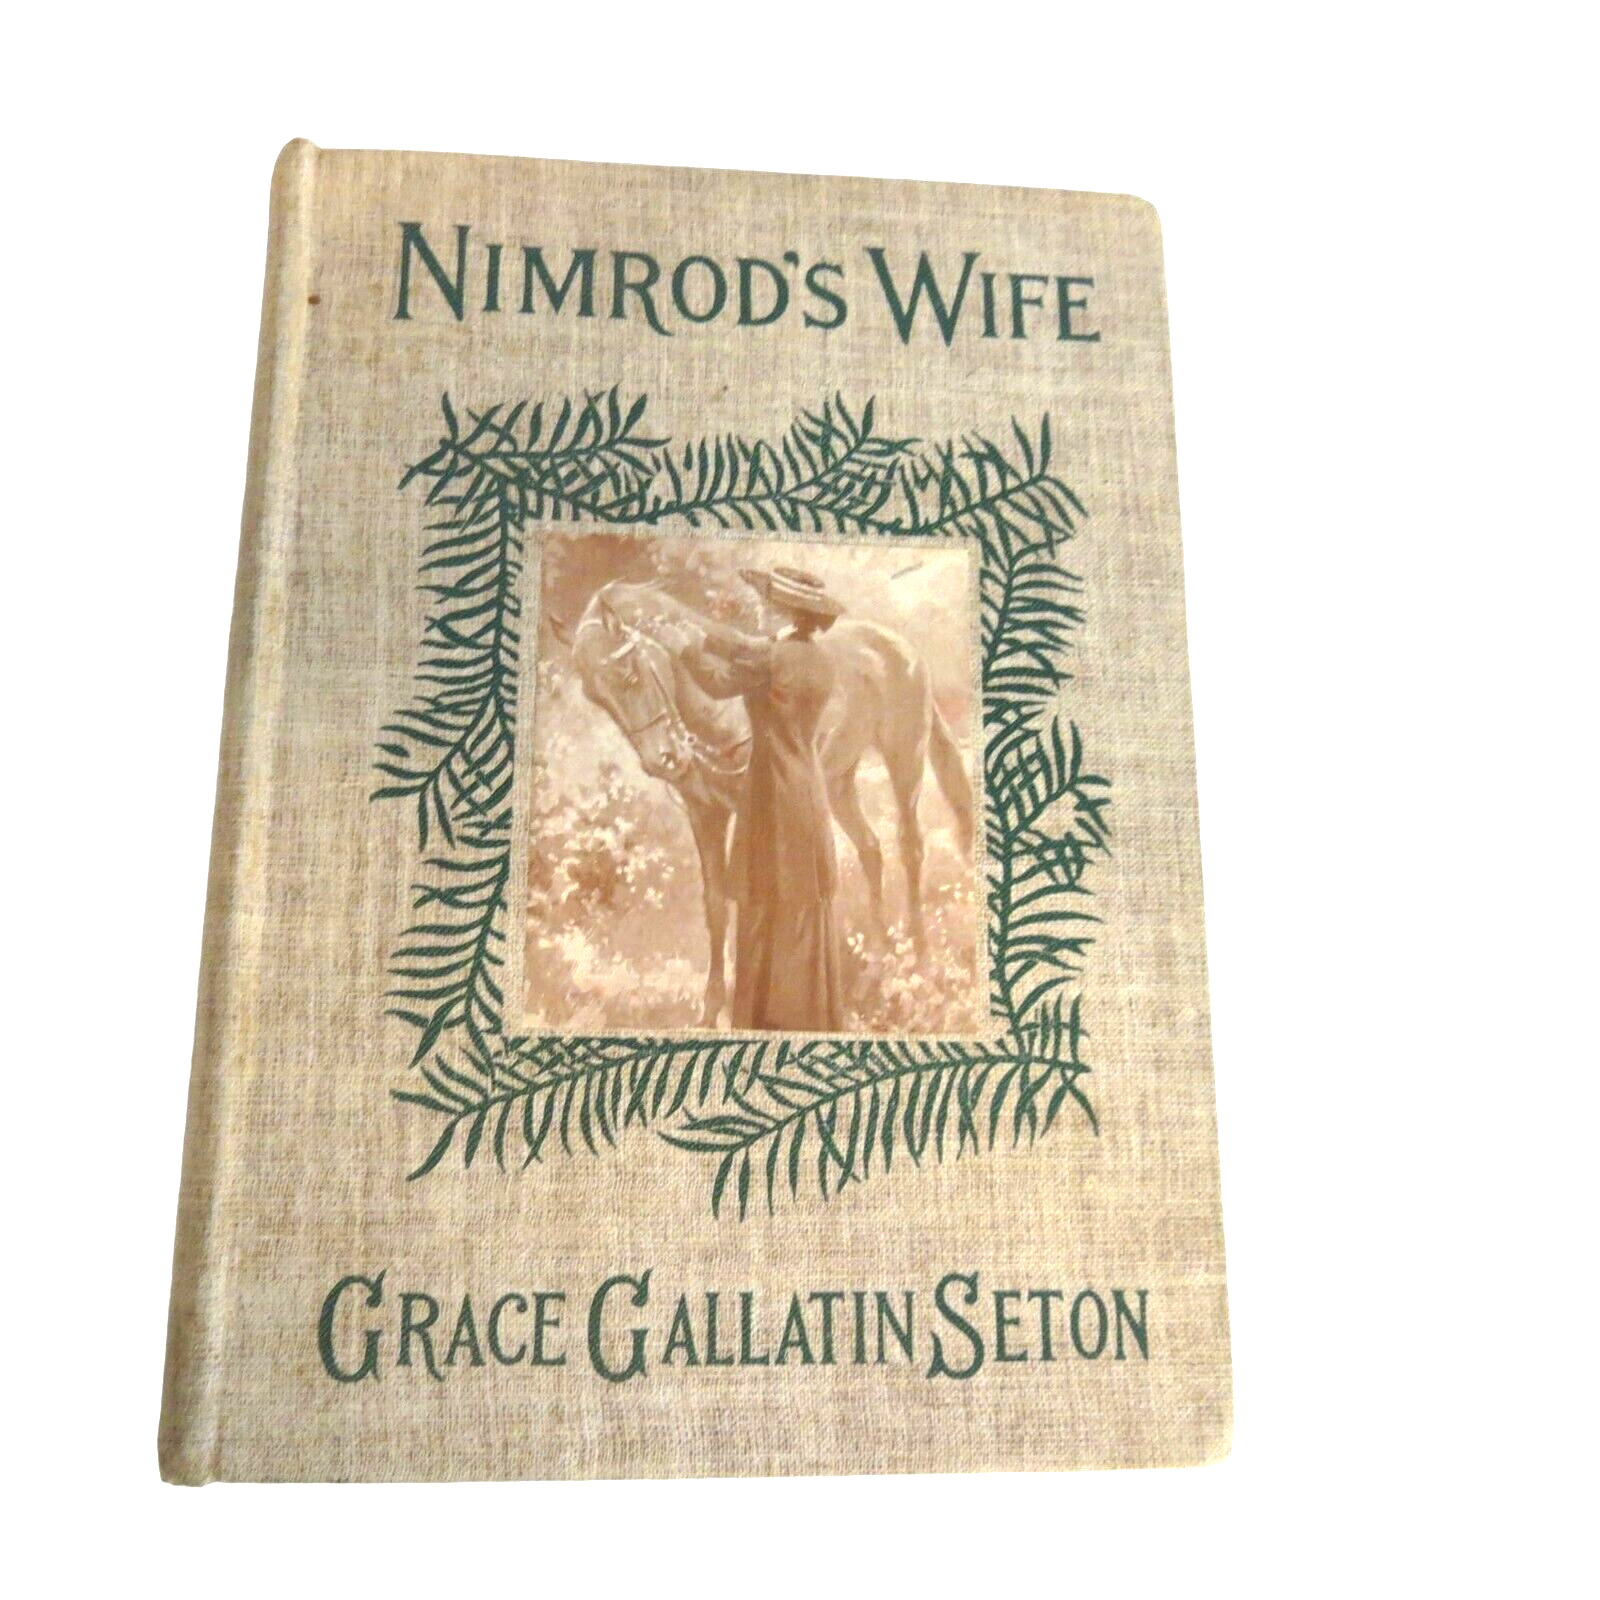 Nimrod's Wife by Grace Gallatin Seton 1907 (First Edition) Hardback Doubleday